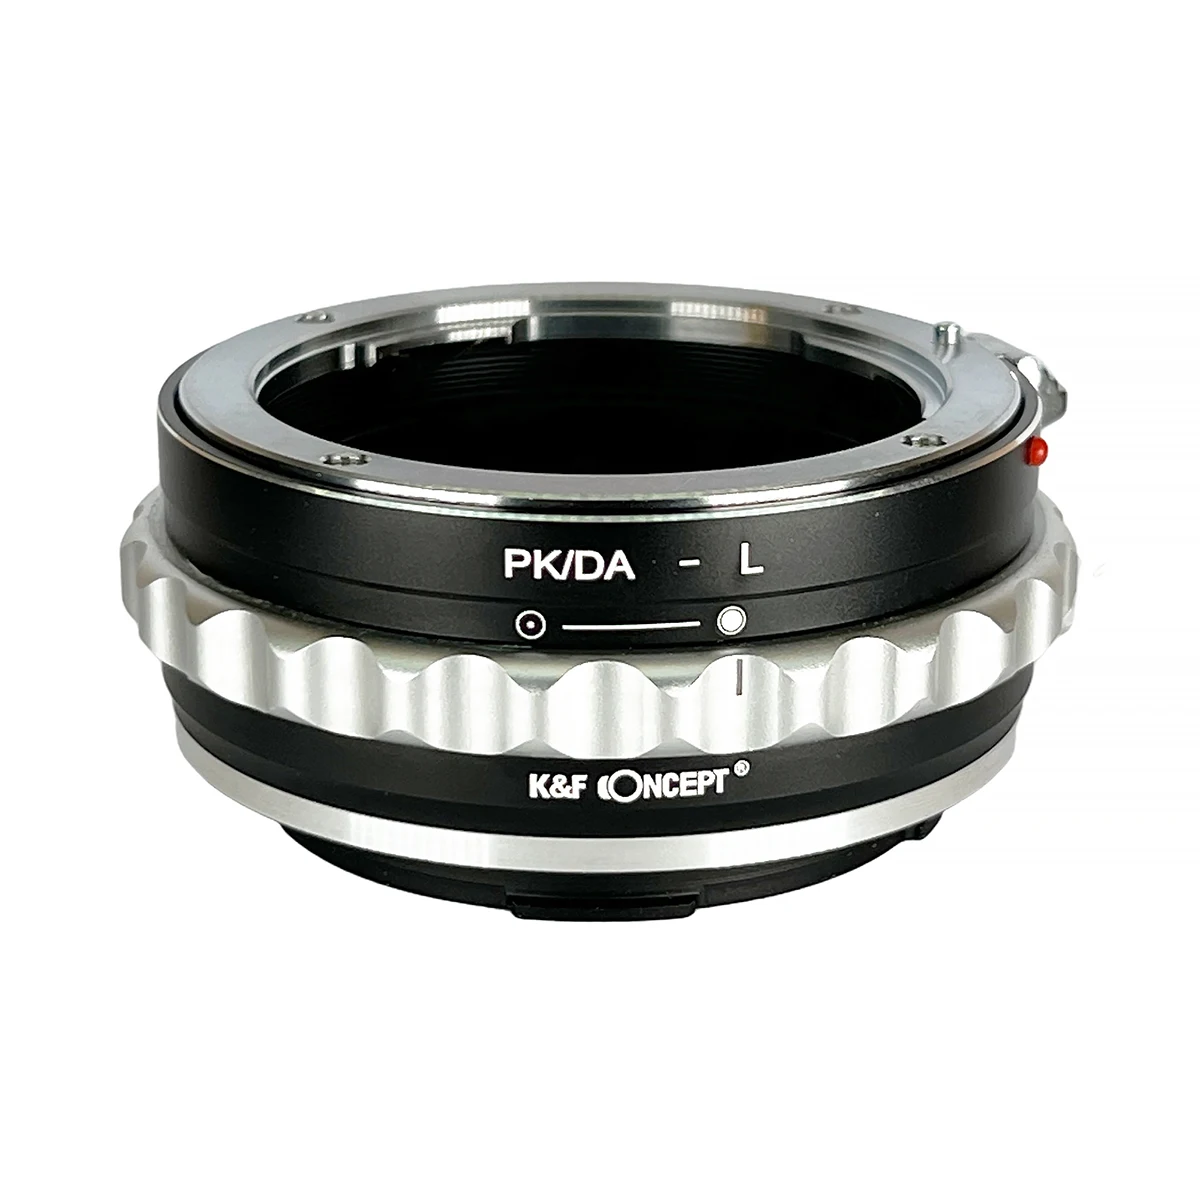 

K&F Concept DA to LSL Lens Adapter For Pentax DA to Leica TL TL2 CL SL SL2 Panasonic S1 S1R S1H S5 Sigma fp fpL